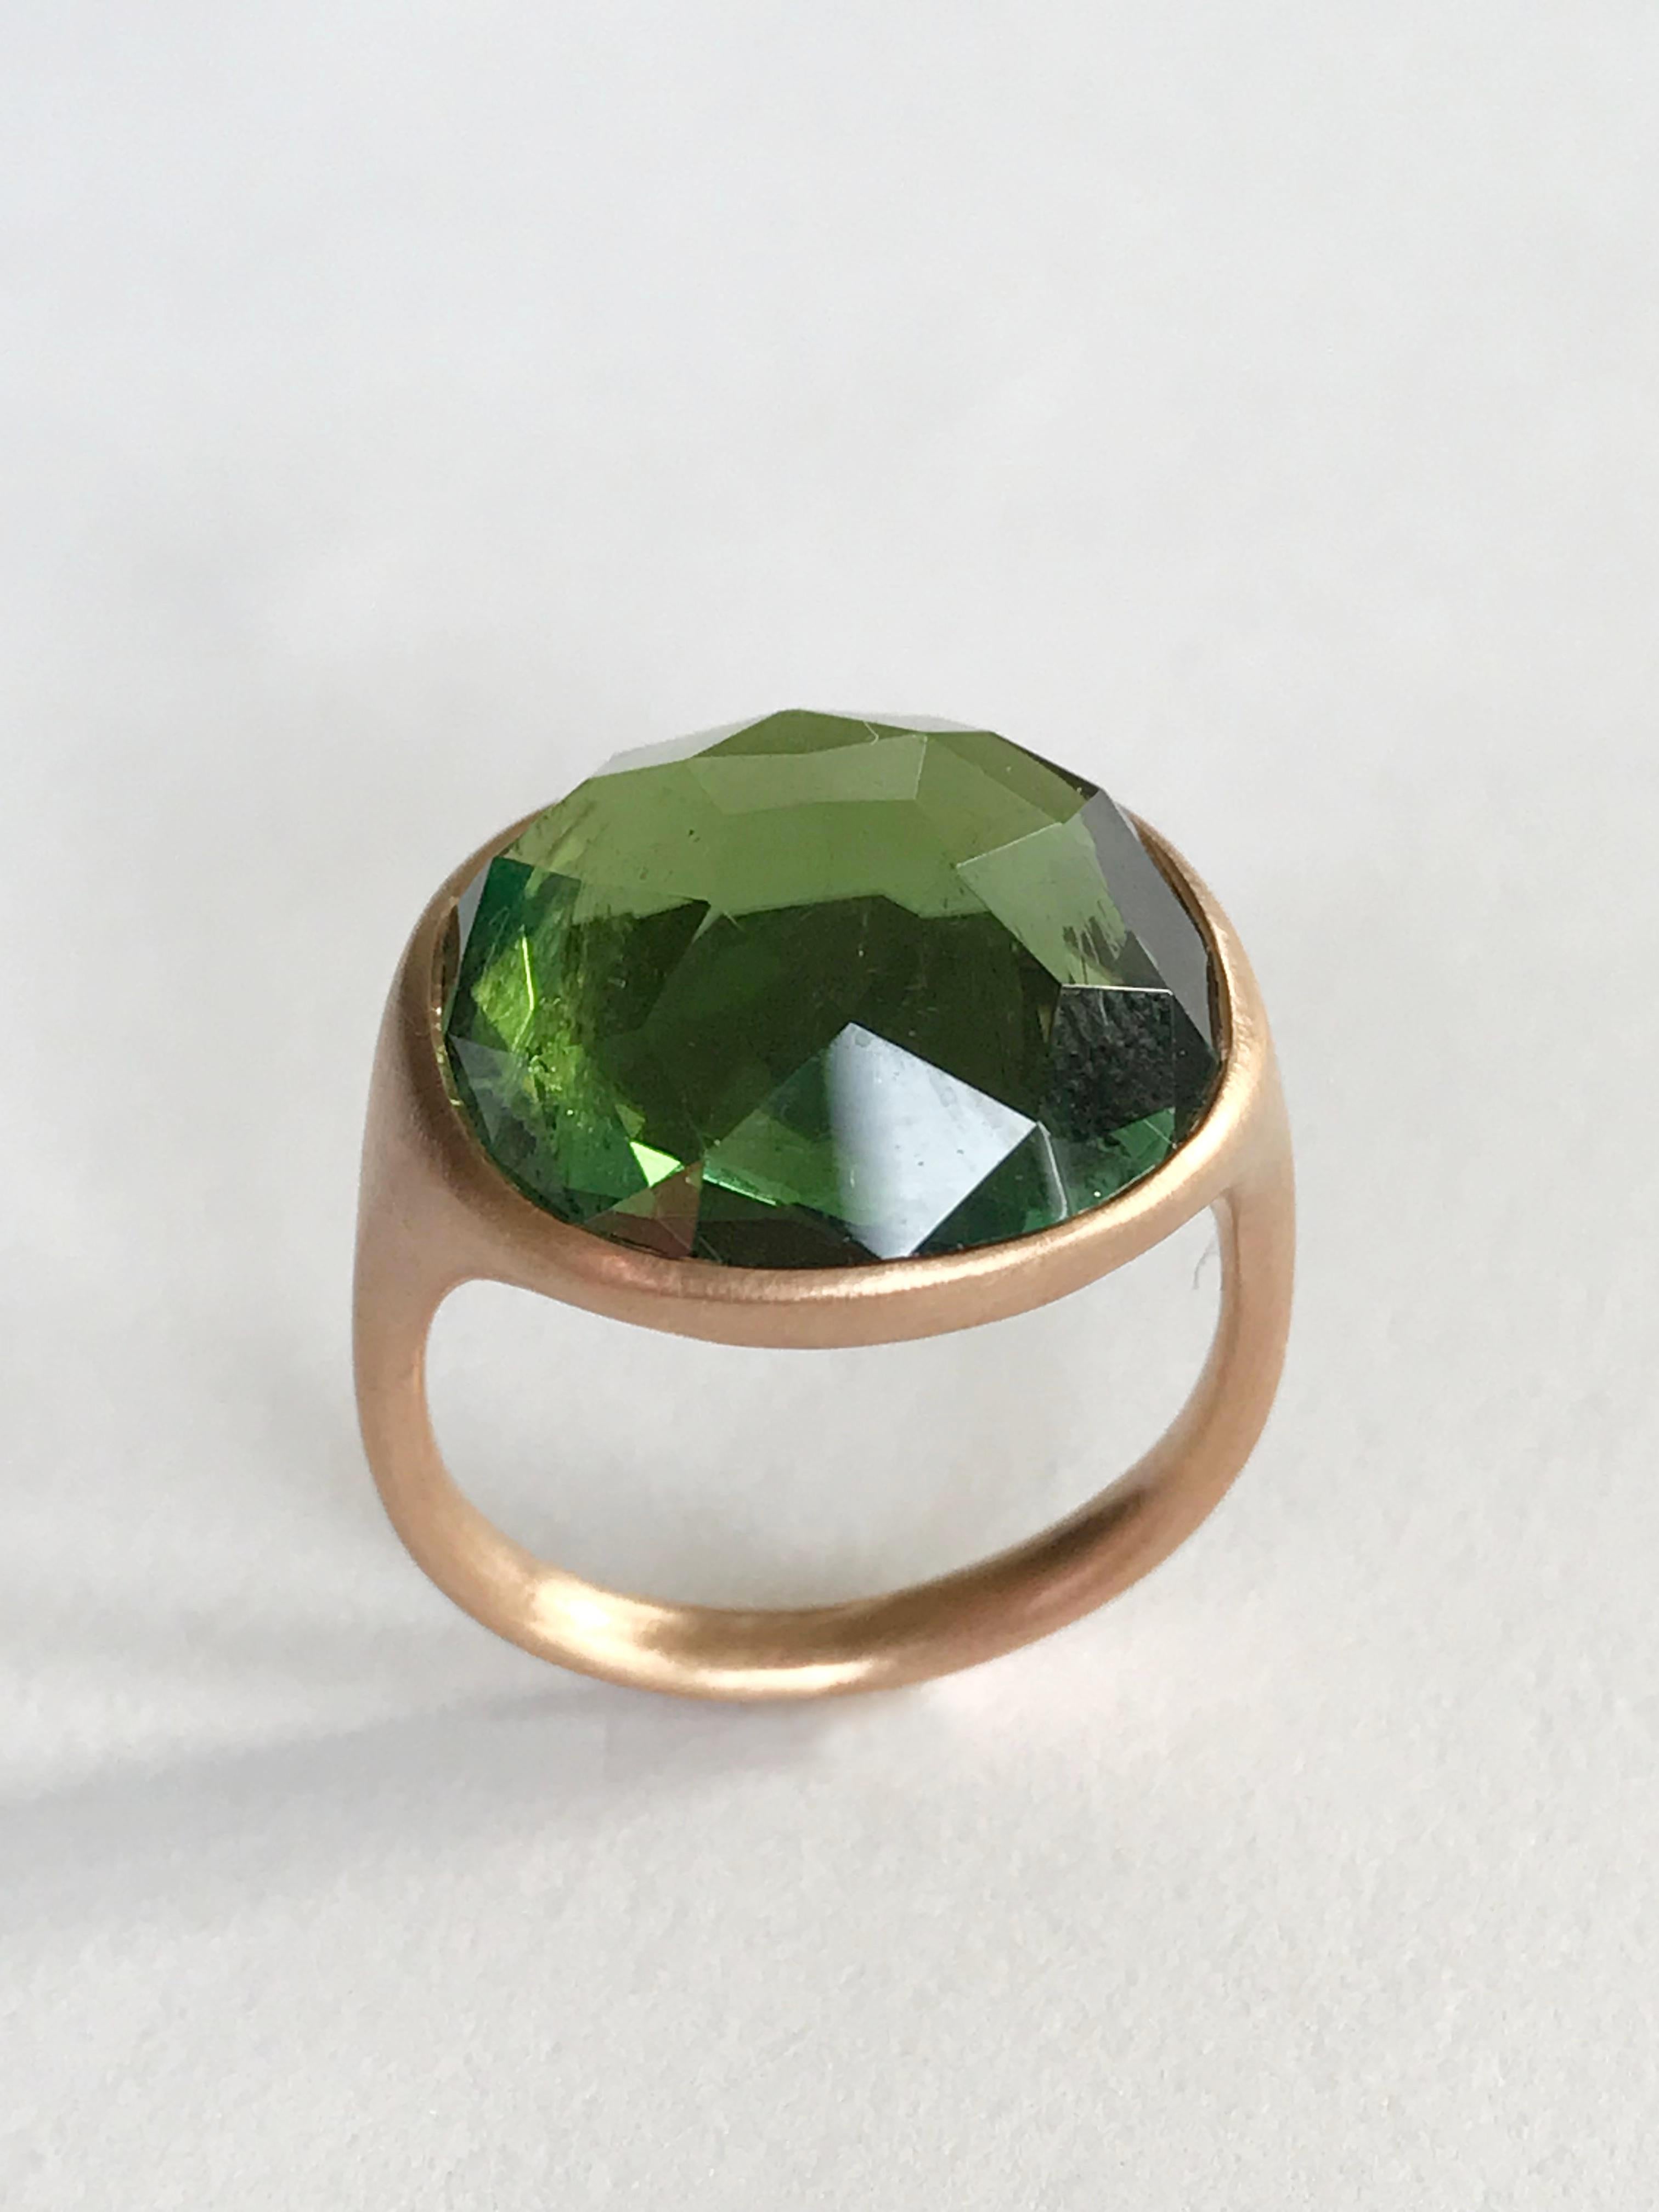 Contemporary Dalben Green Toumaline Rose Gold Ring